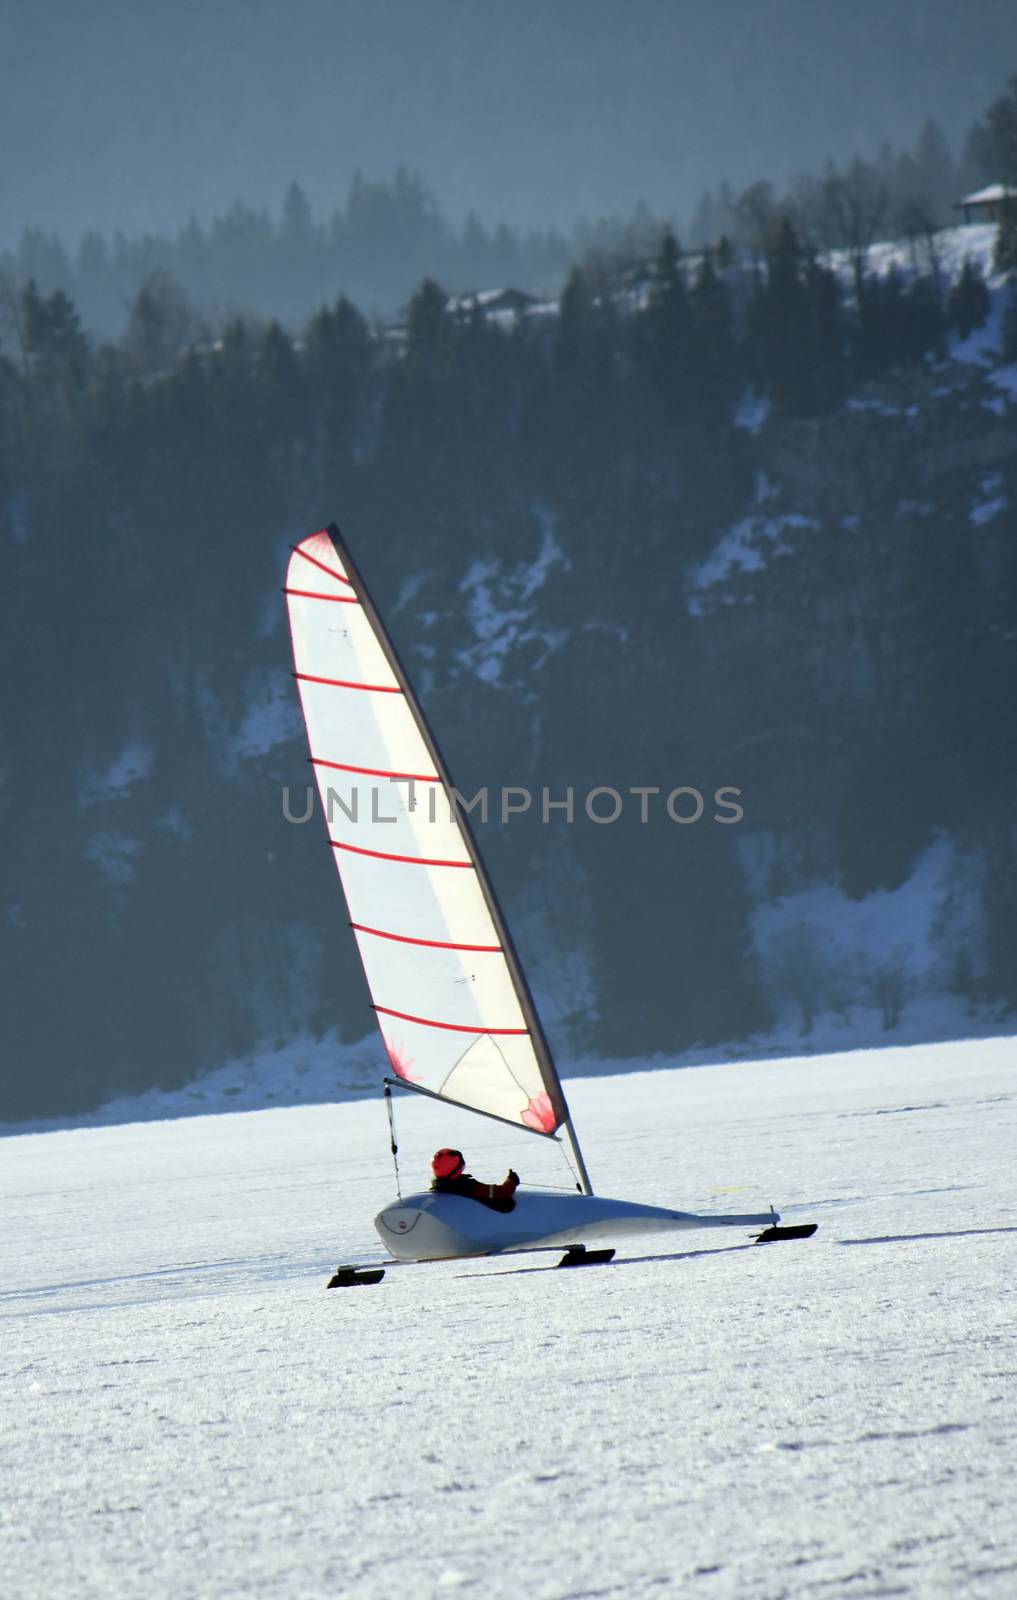 Ice sailing on the frozen lake, Joux valley, Switzerland